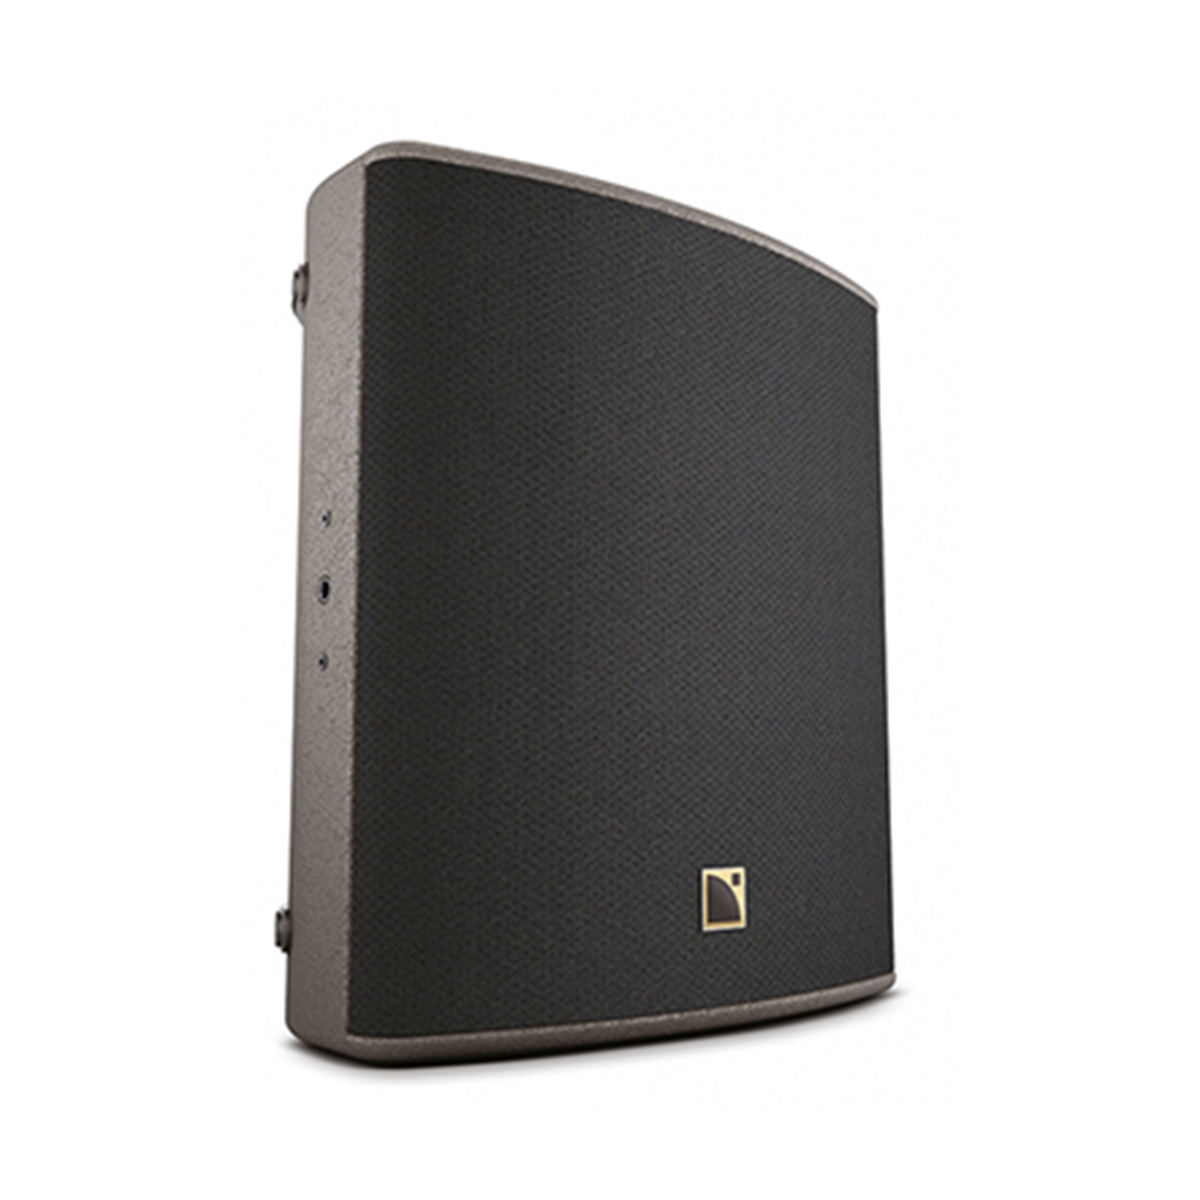 L-Acoustics X12 speaker